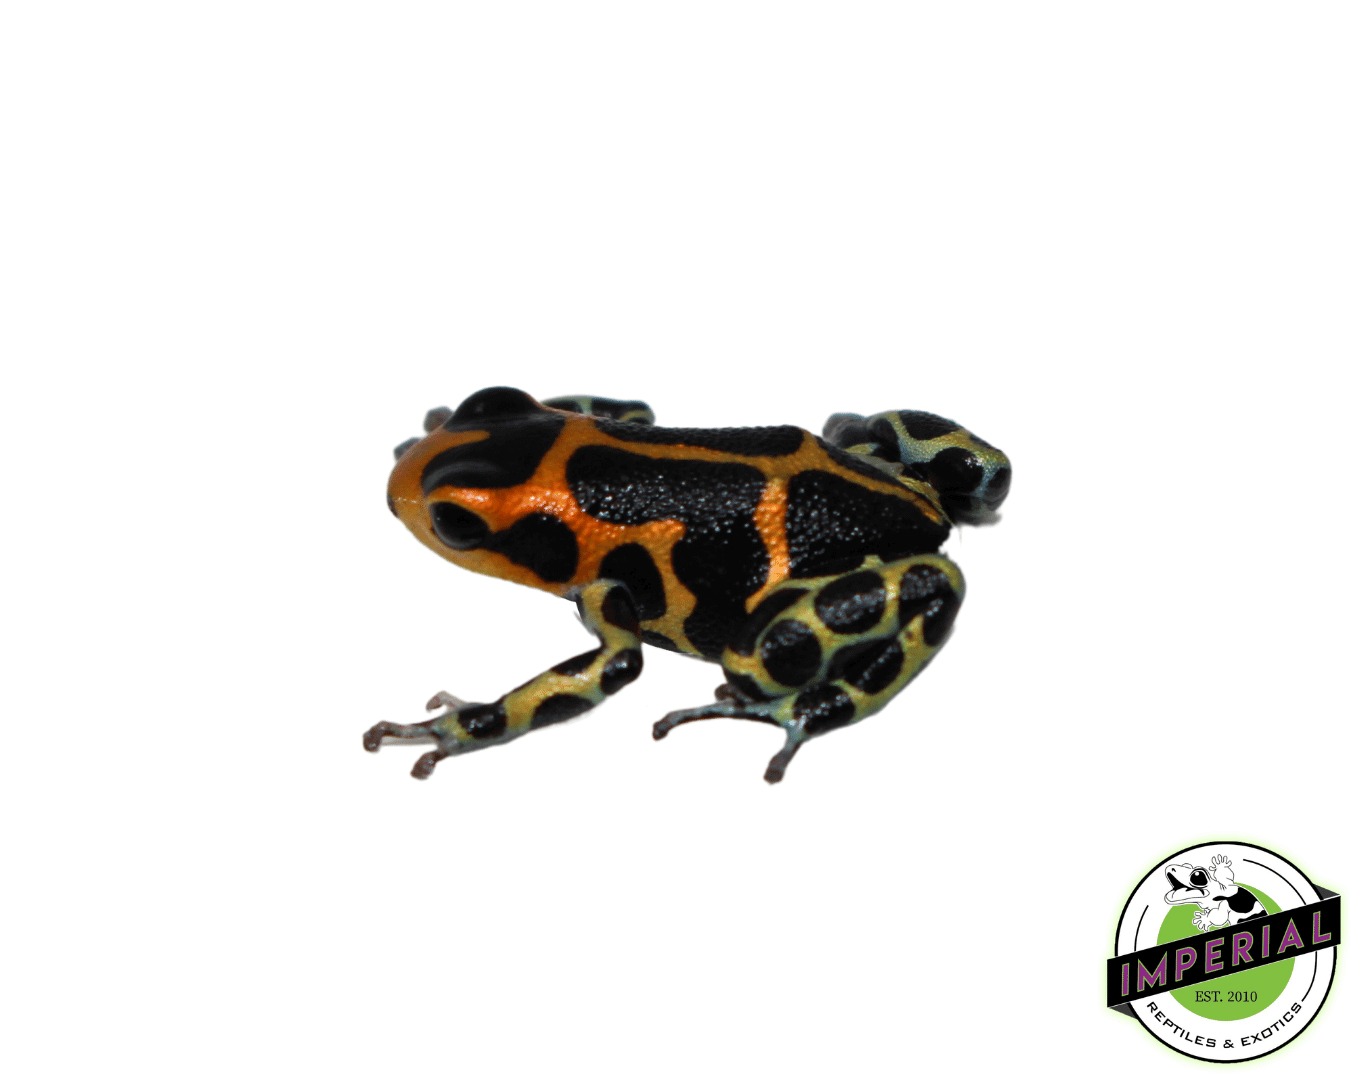 intermedius poison dart frog for sale, buy amphibians online